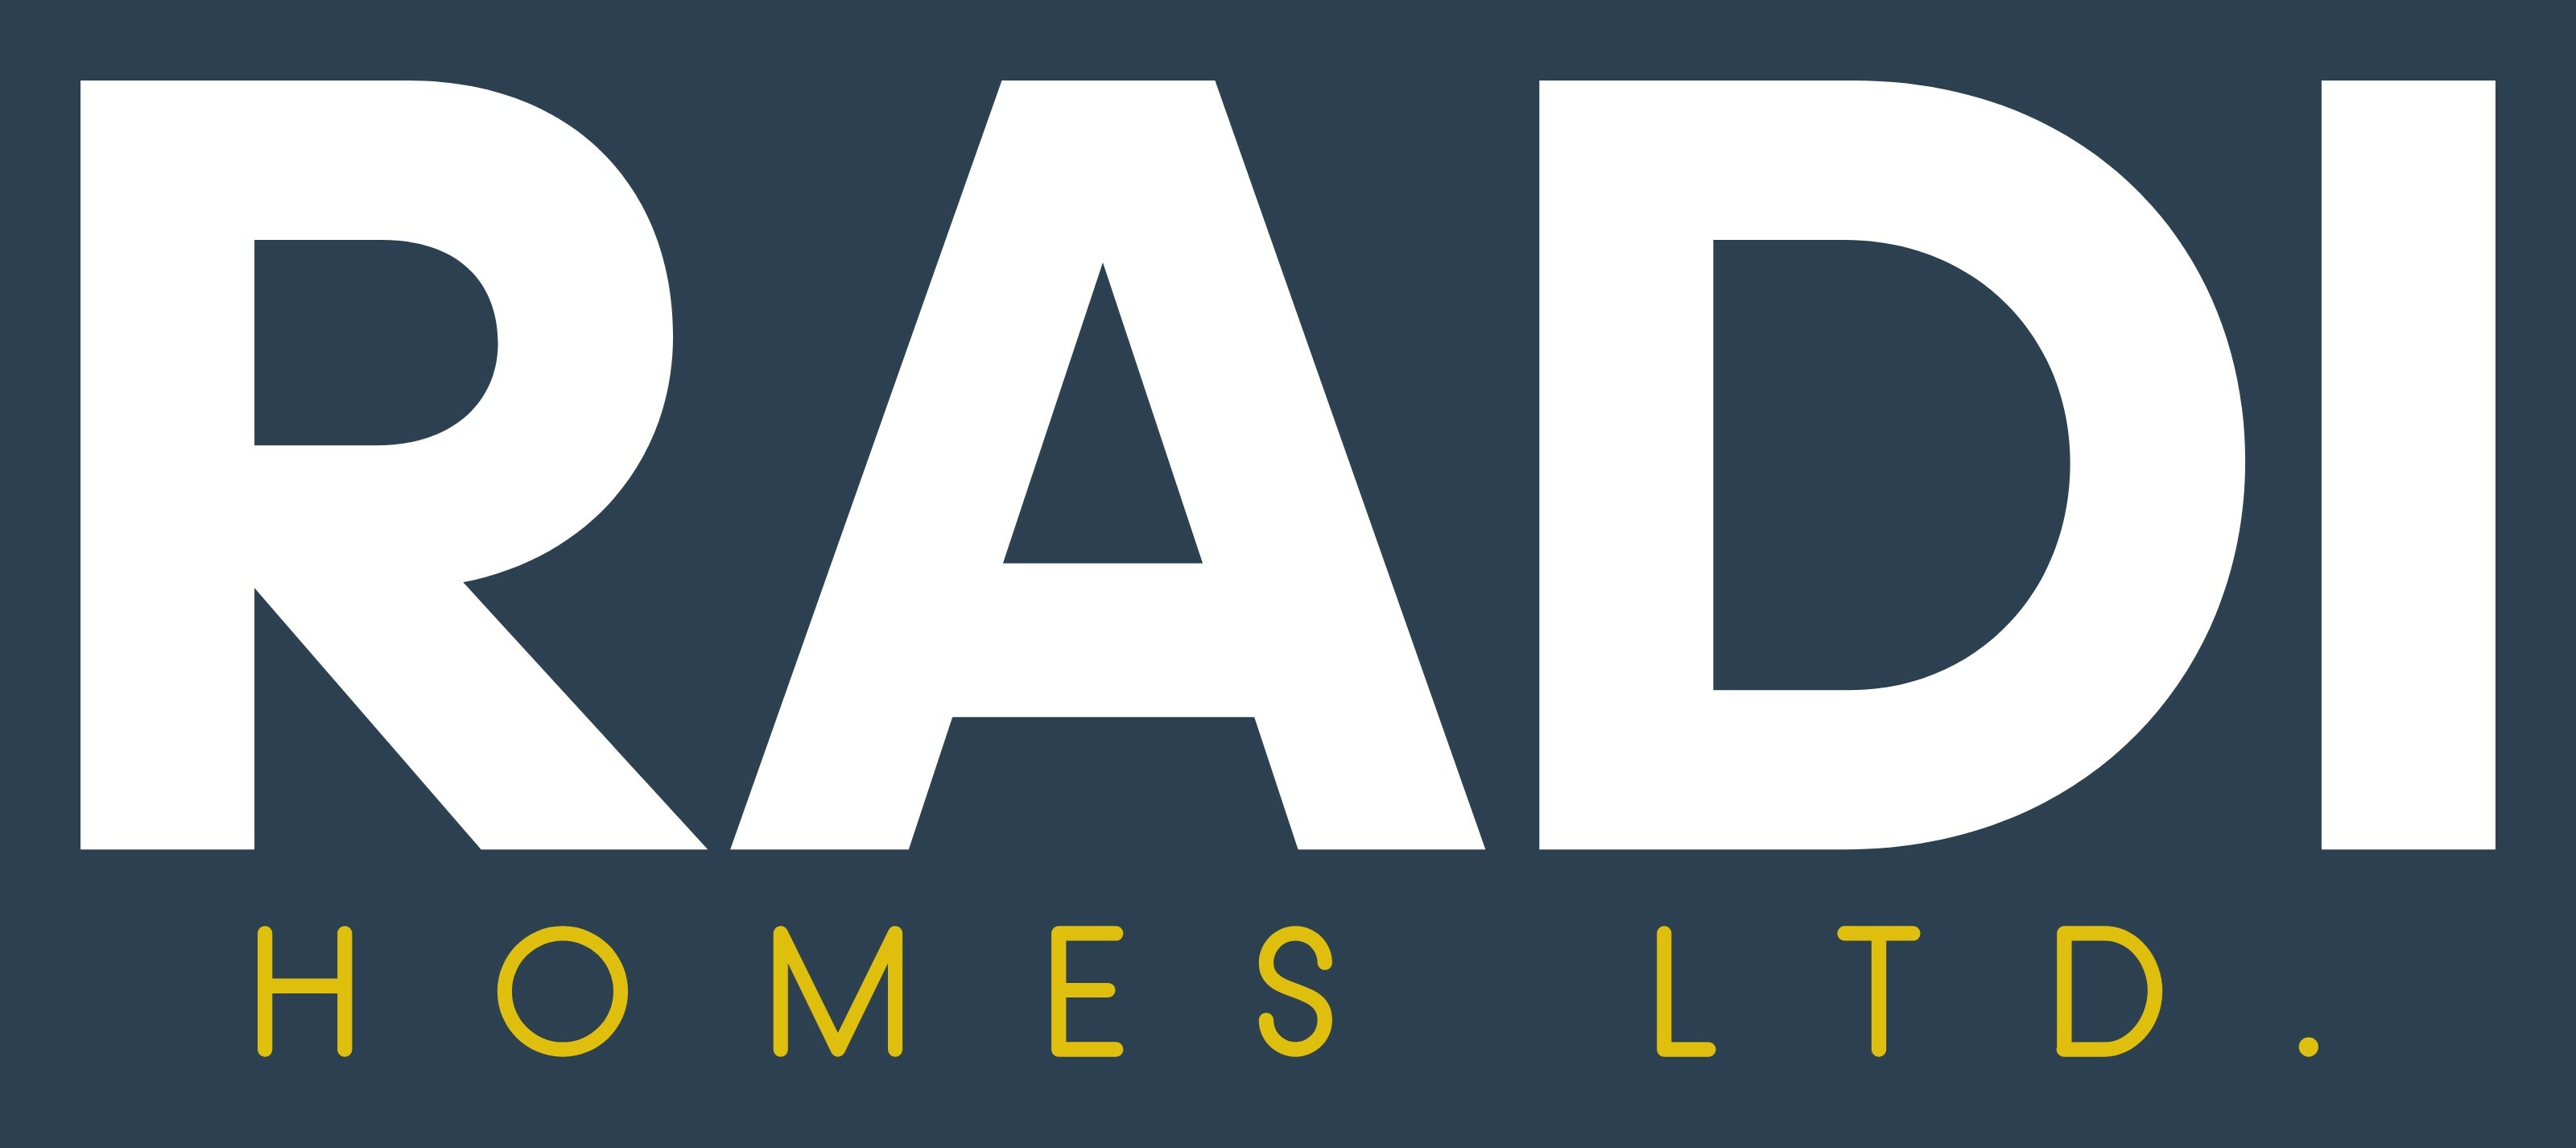 Radi Homes Ltd's logo